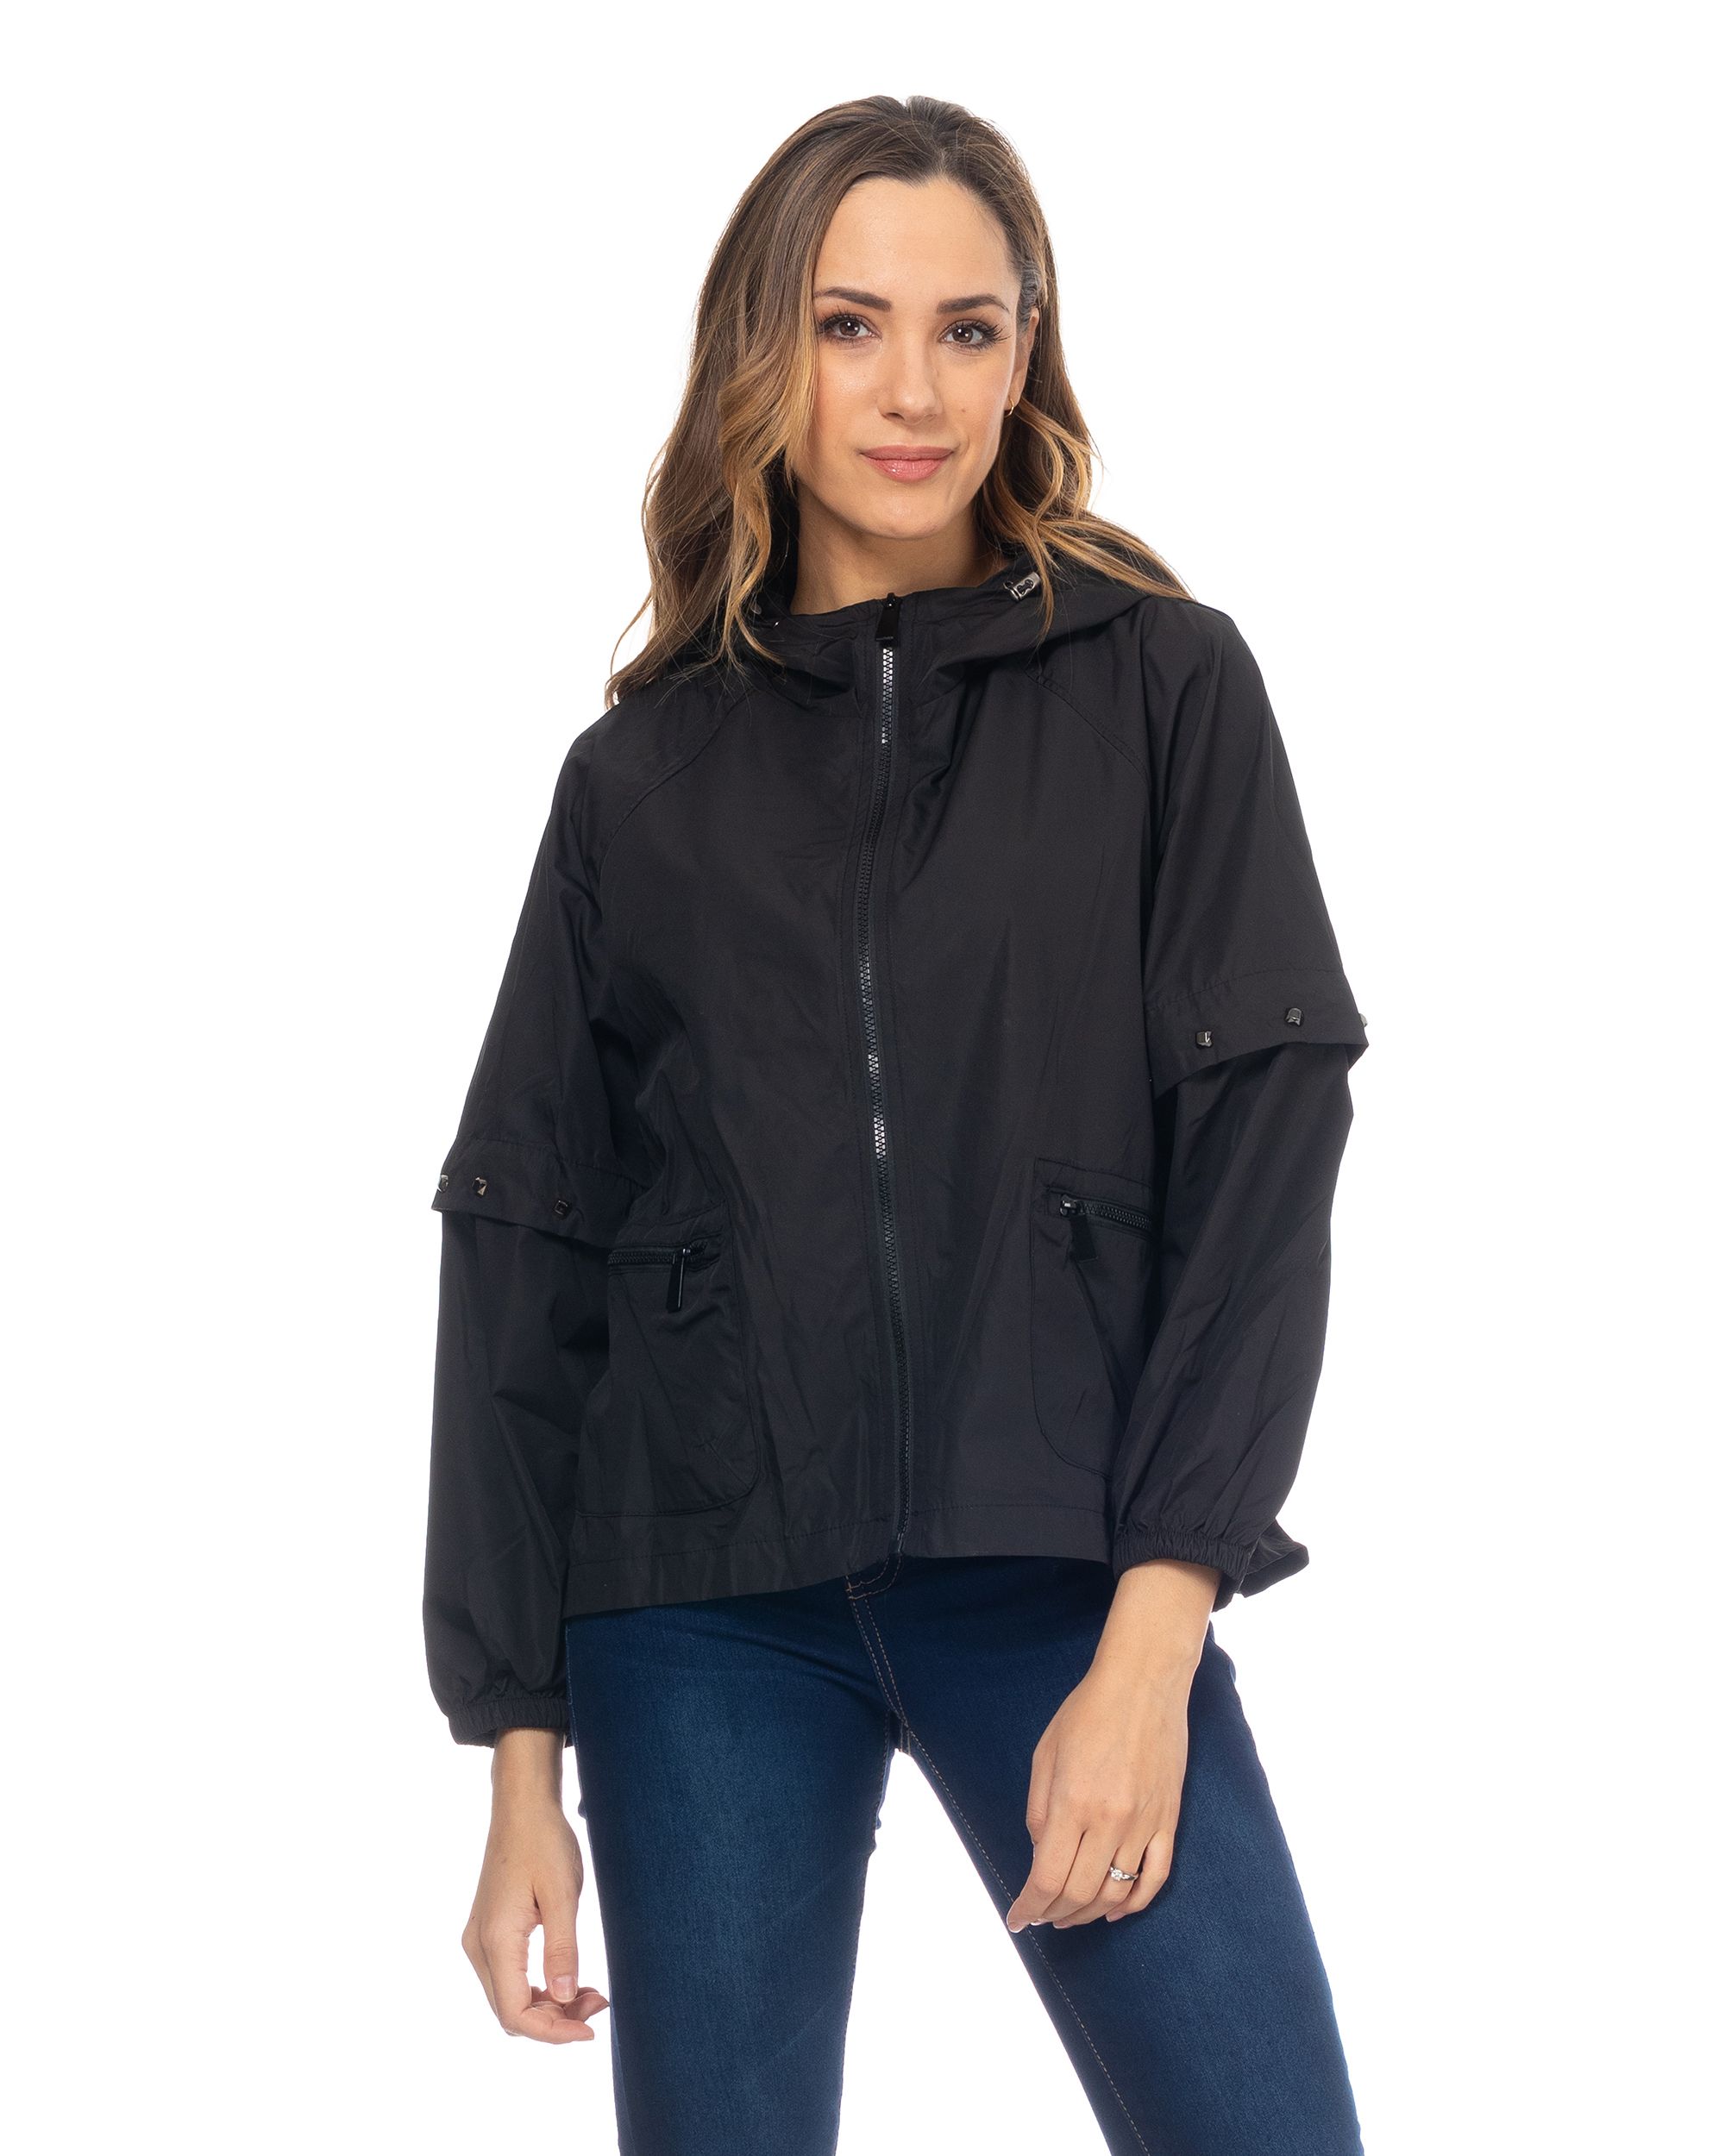 Raincoat With Tacks Around The Sleeves And Hood